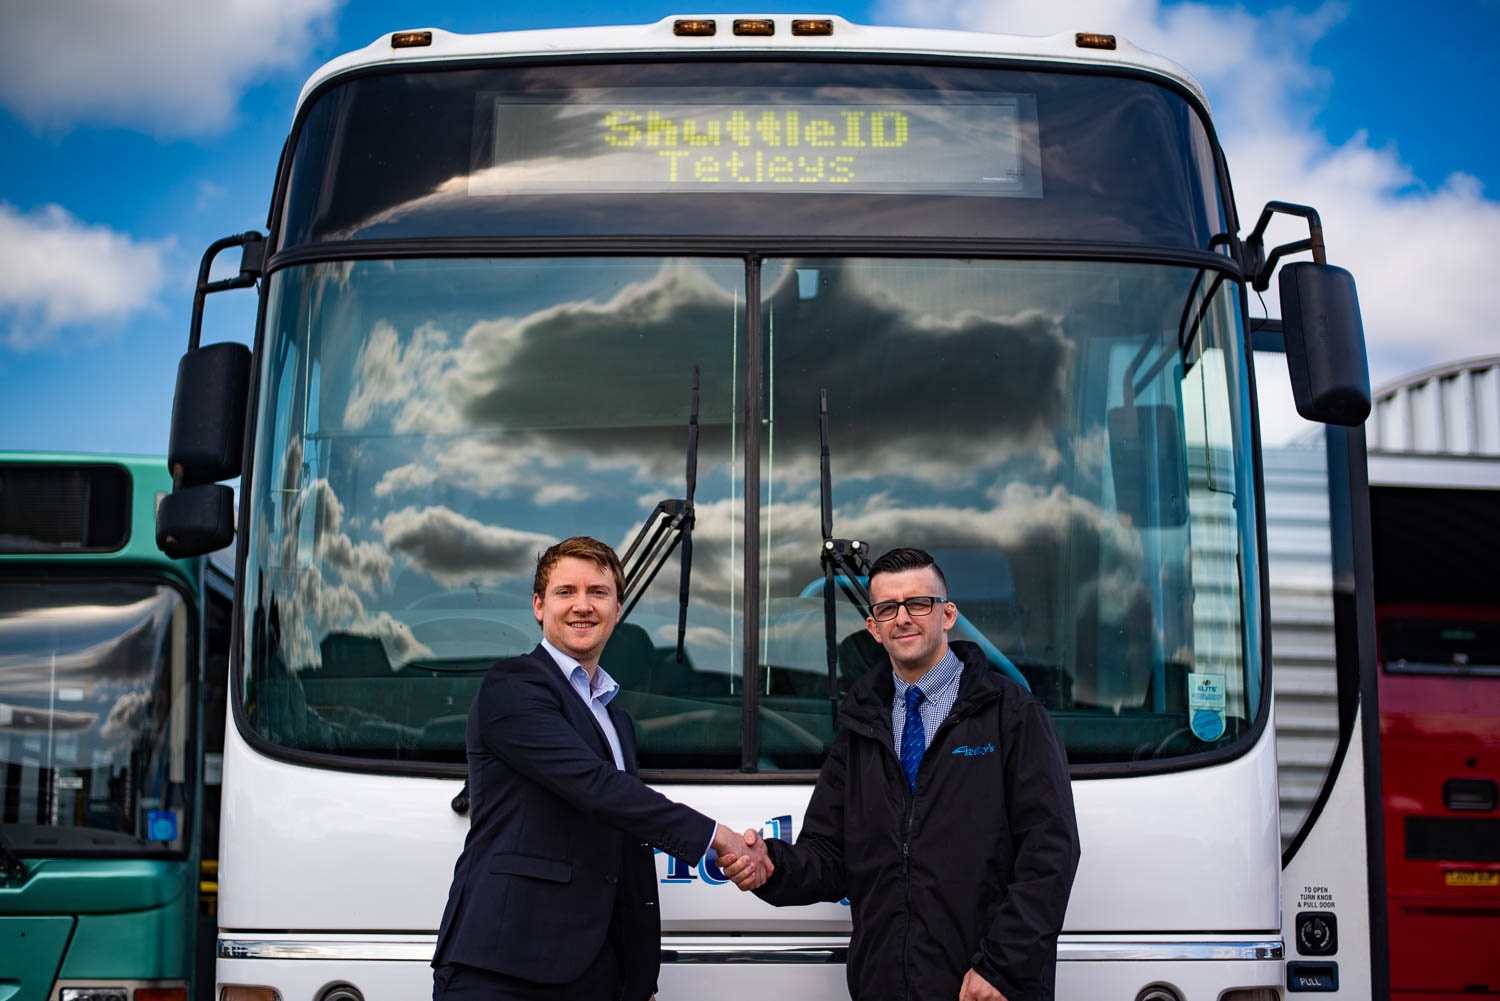 ShuttleID launches with Tetleys Coaches